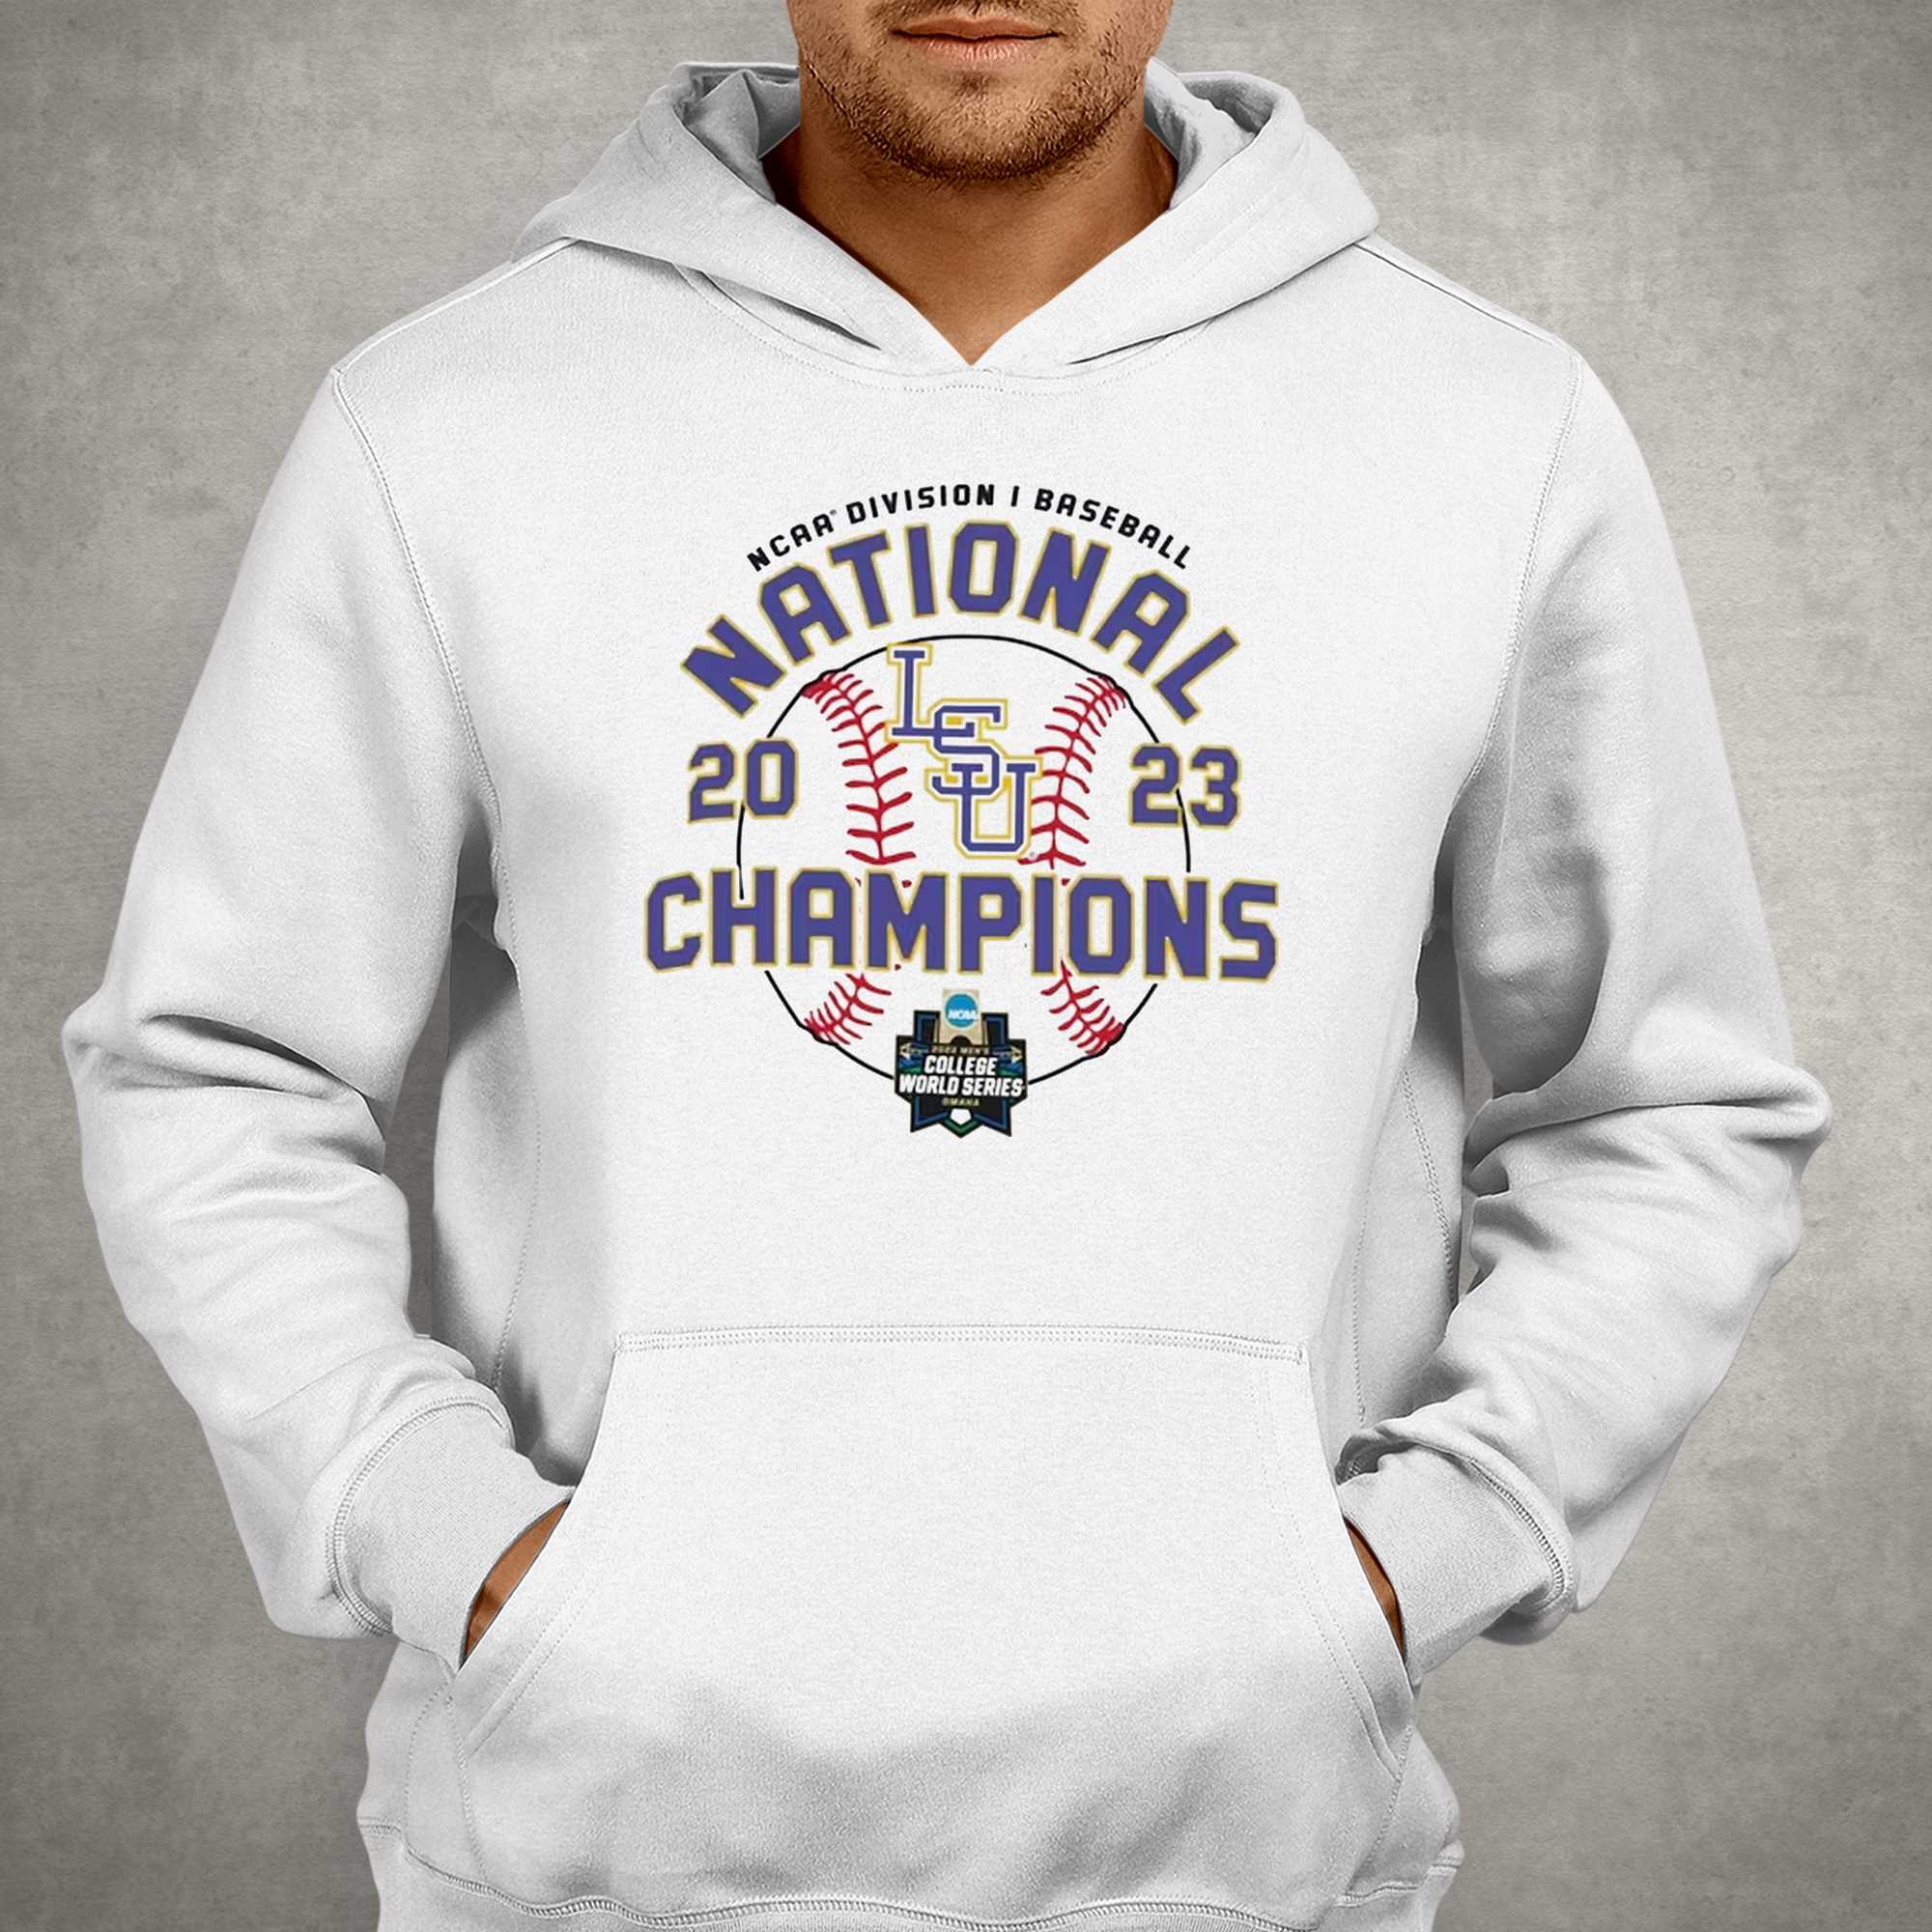 LSU Baseball Shirt - White exclusive at Tiger Nation